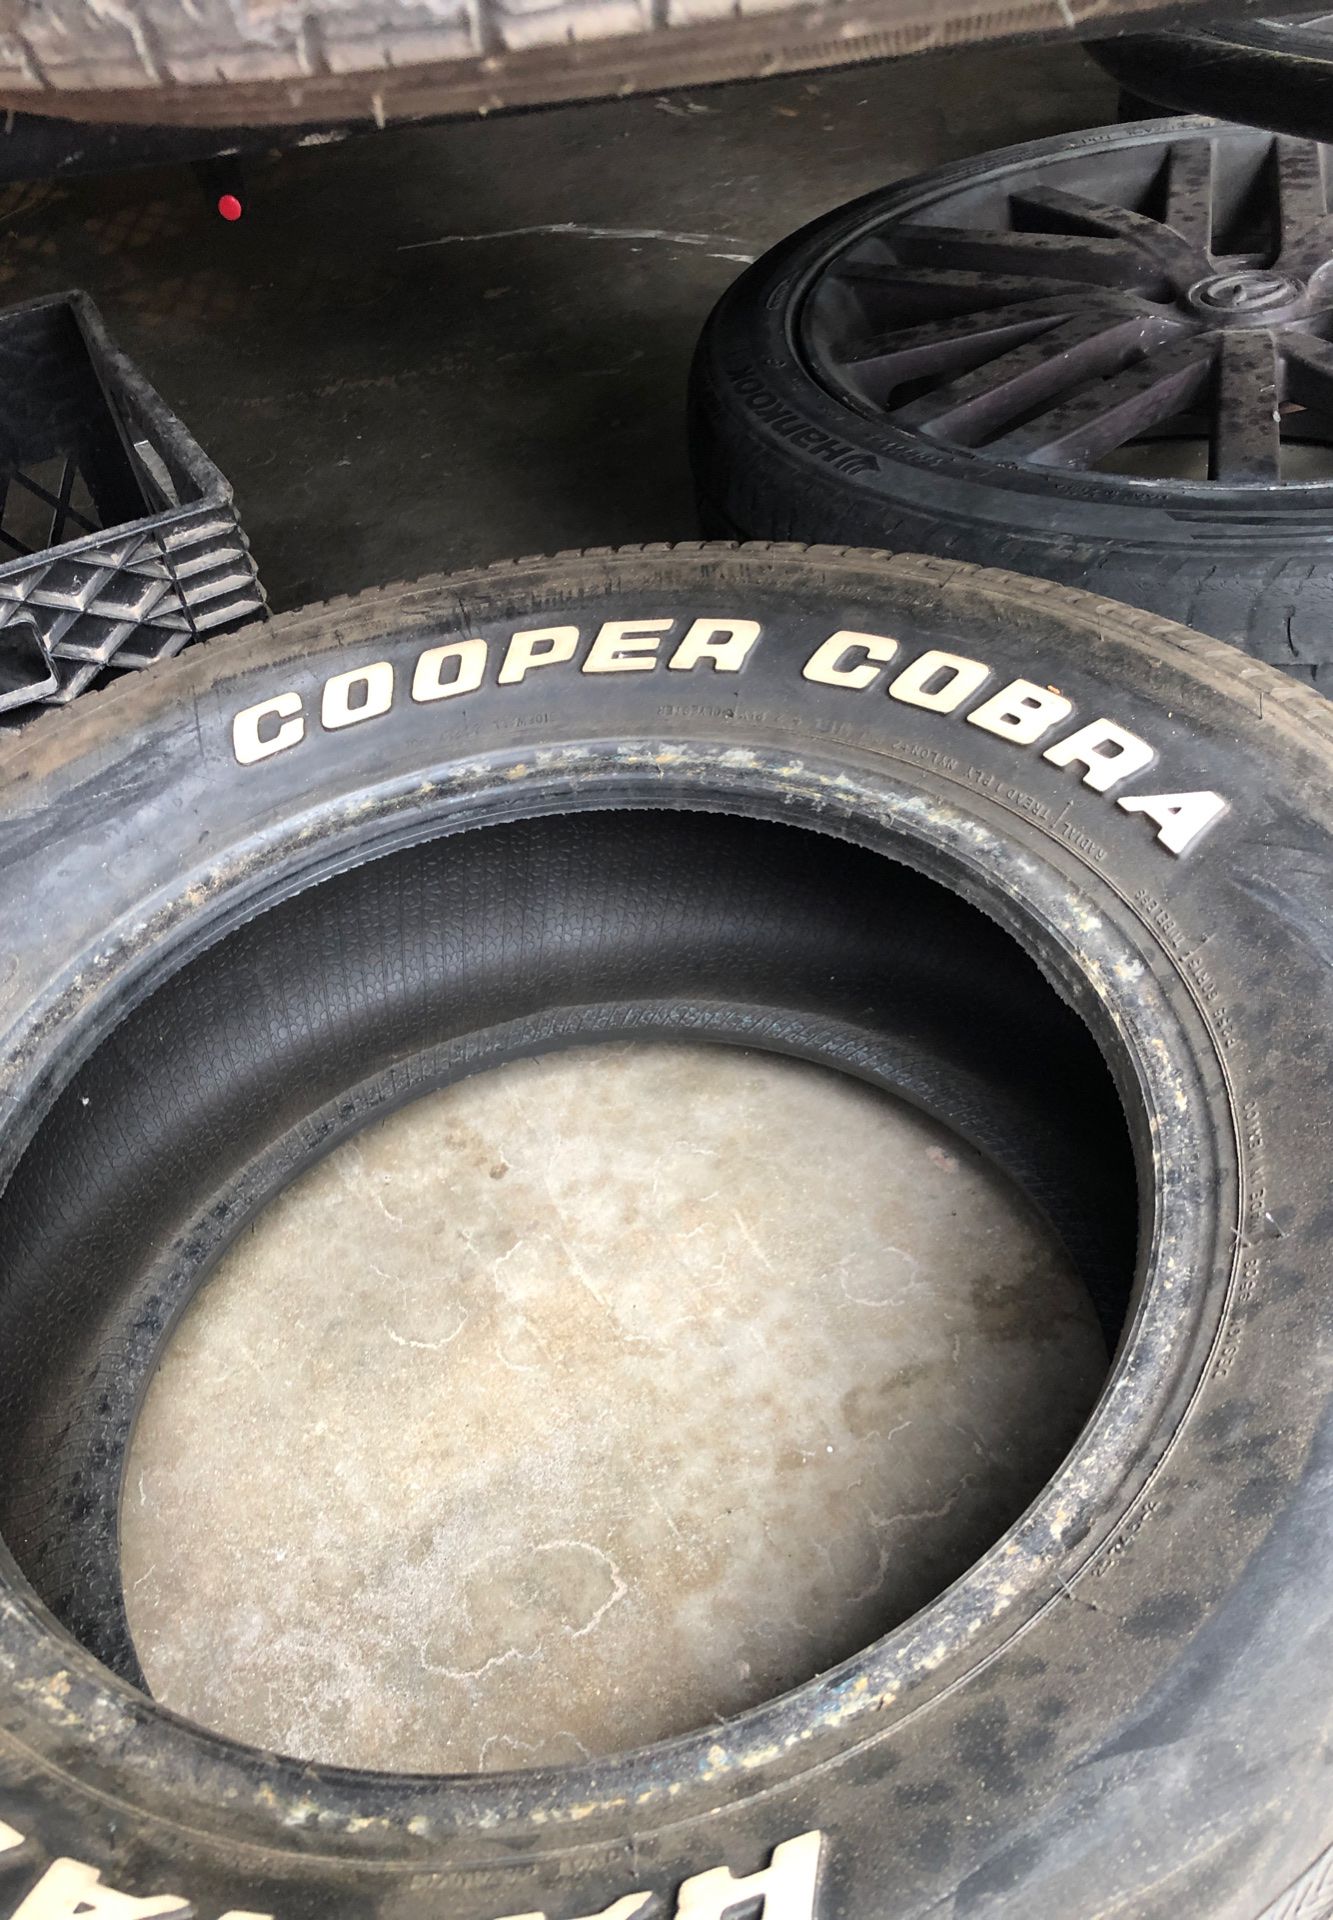 Free cooper cobra tire